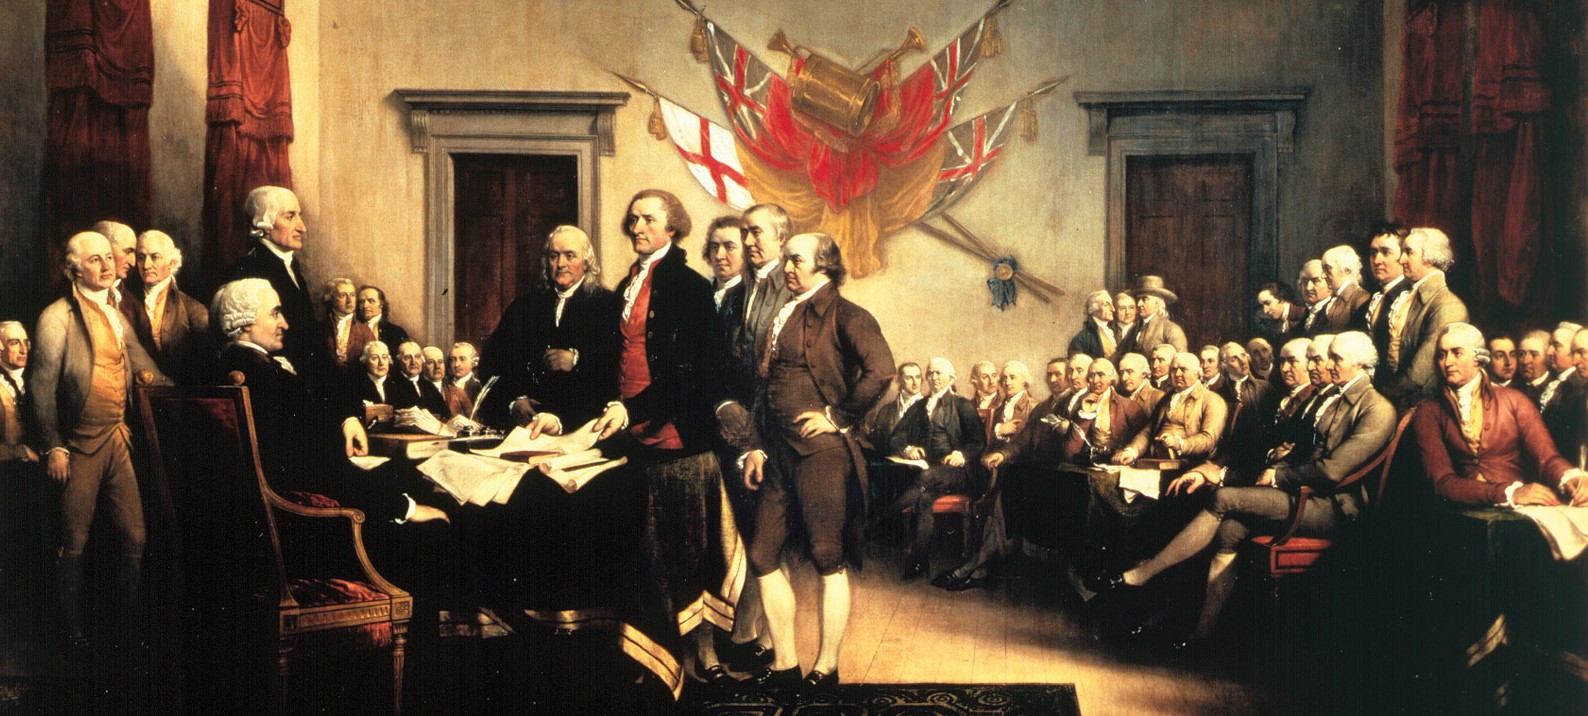 Declaration of Independence Vintage Image Pictures July 4, 1776